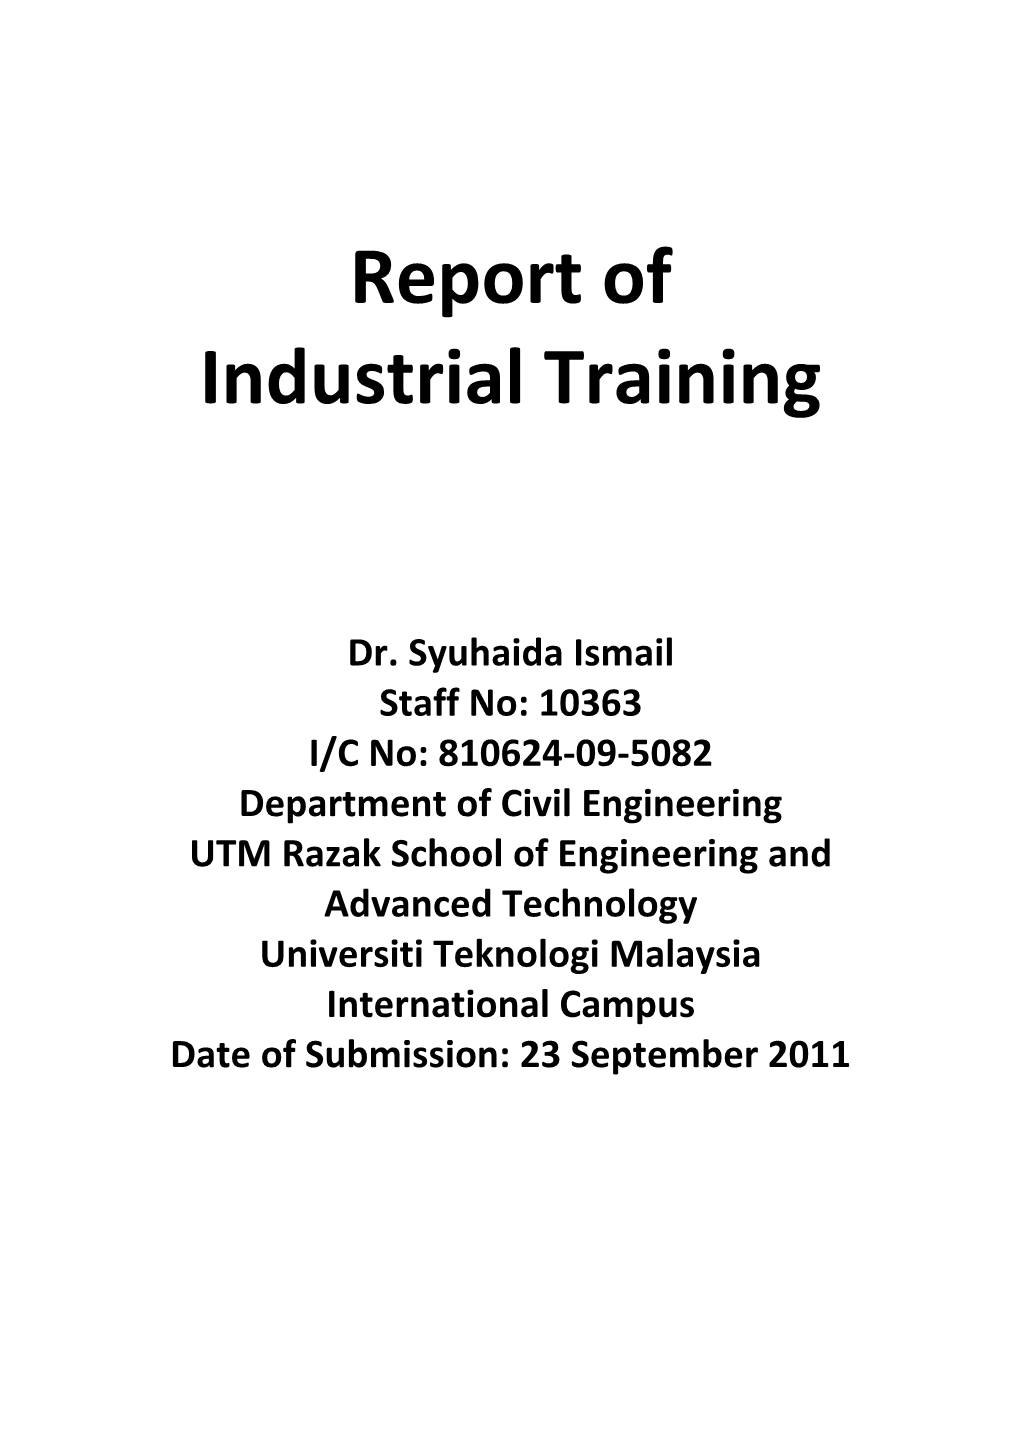 UTM Razak School of Engineering and Advanced Technology